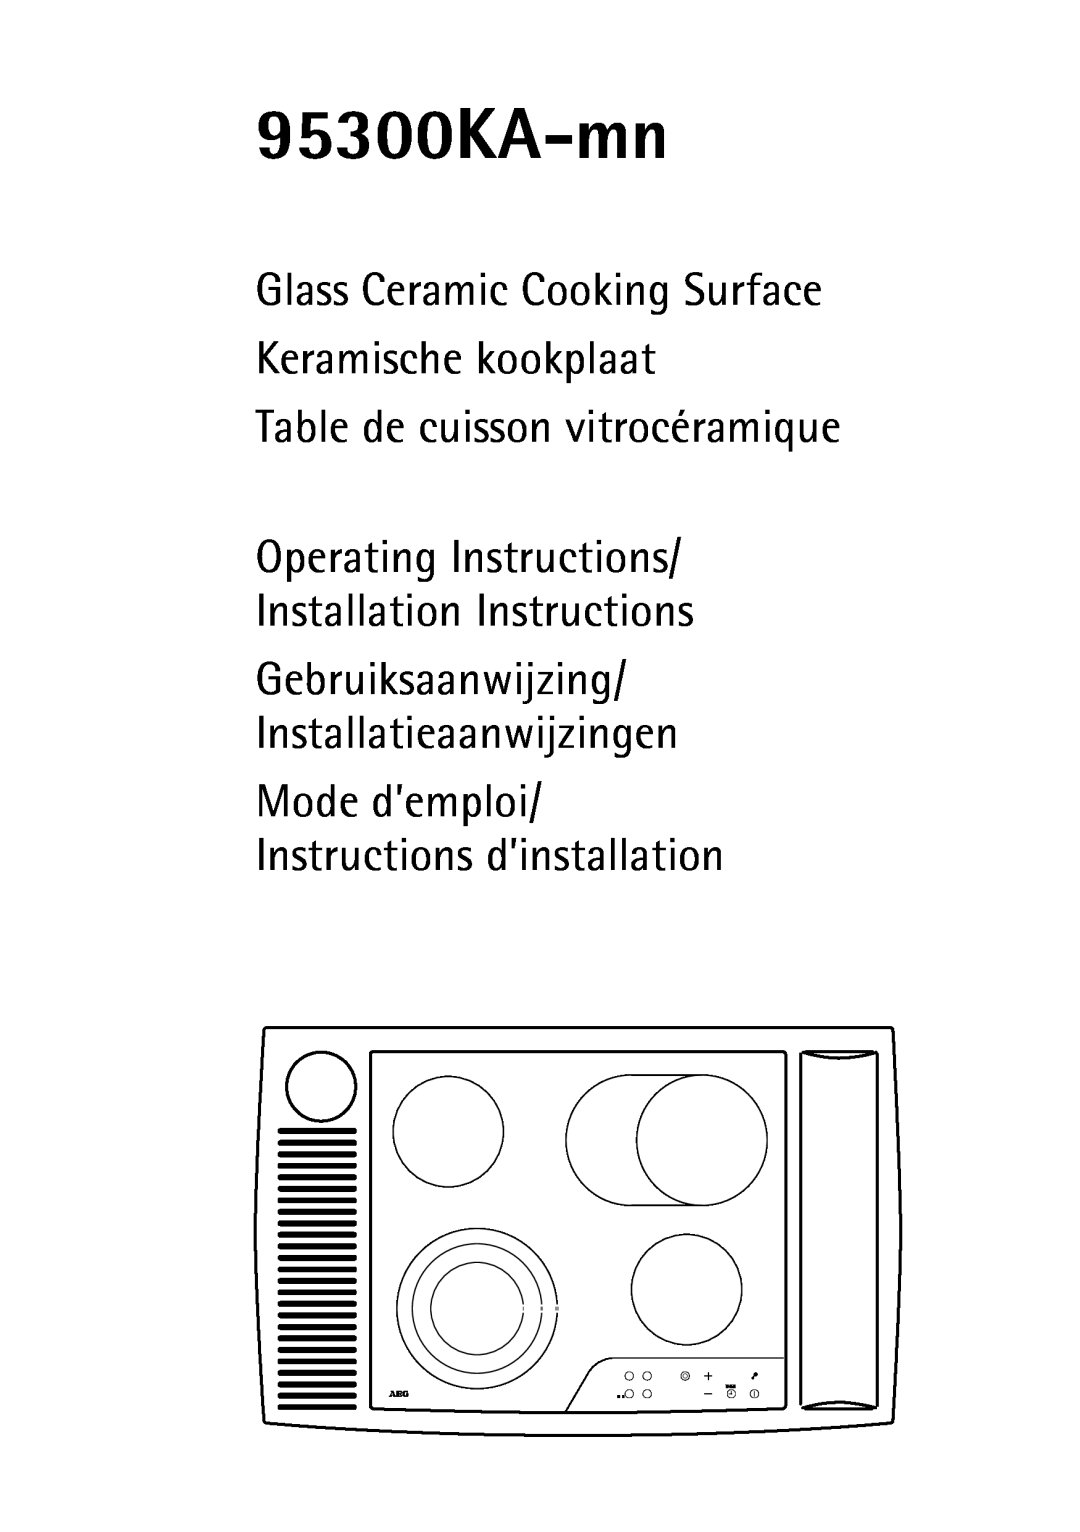 AEG 95300KA-MN operating instructions Table de cuisson vitrocéramique, Operating Instructions/ Installation Instructions 